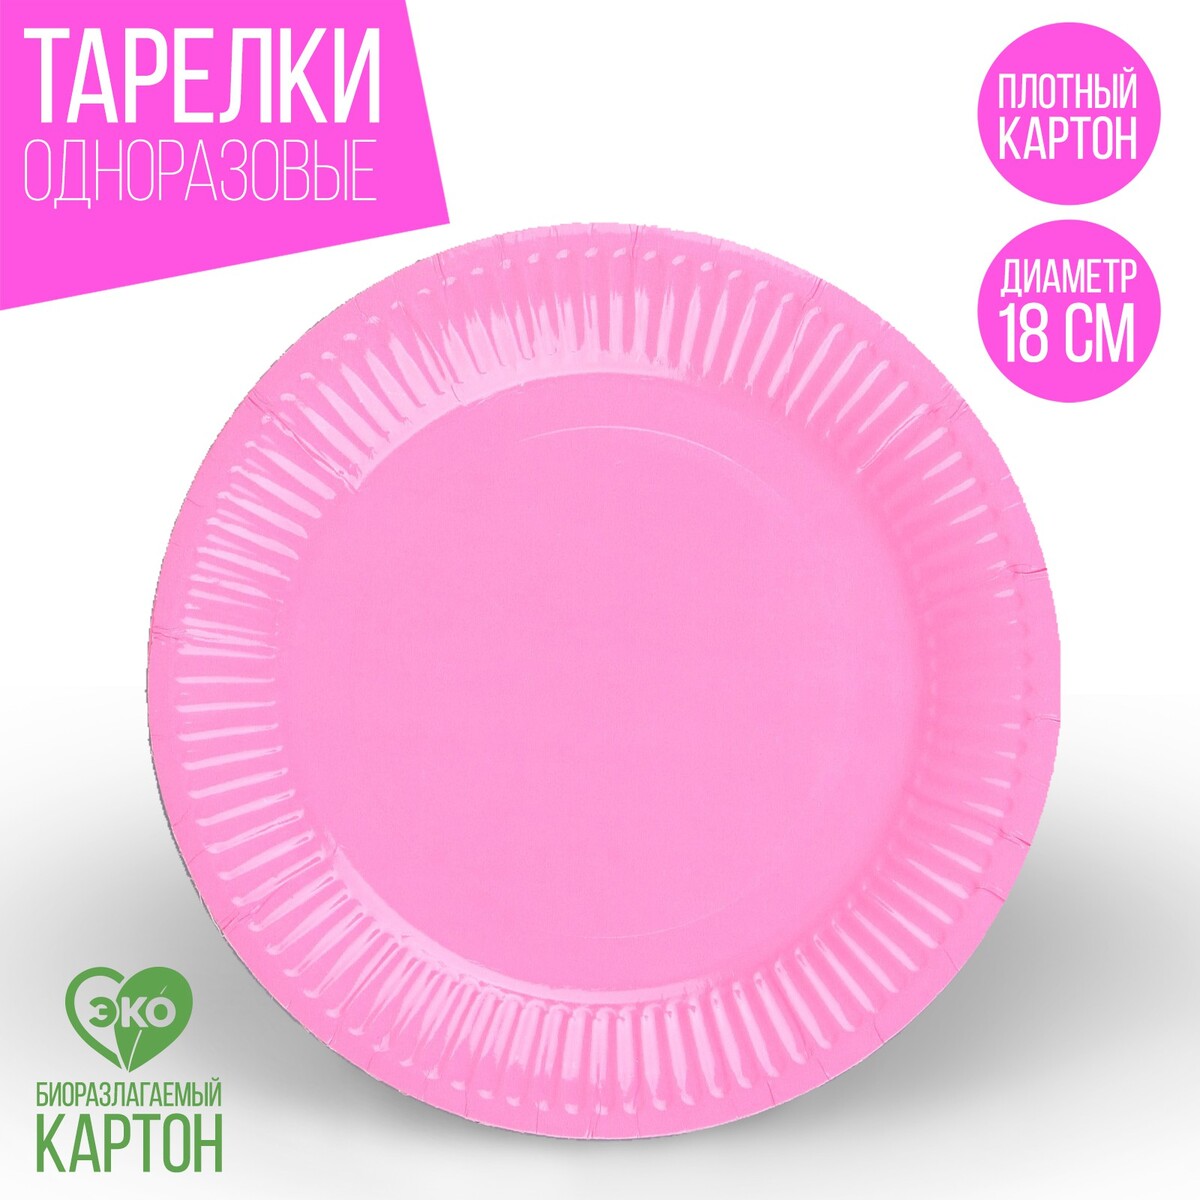 Тарелка одноразовая бумажная однотонная, цвет розовый 18 см, набор 10 штук тарелка бумажная однотонная 18 см в наборе 10 шт желтый